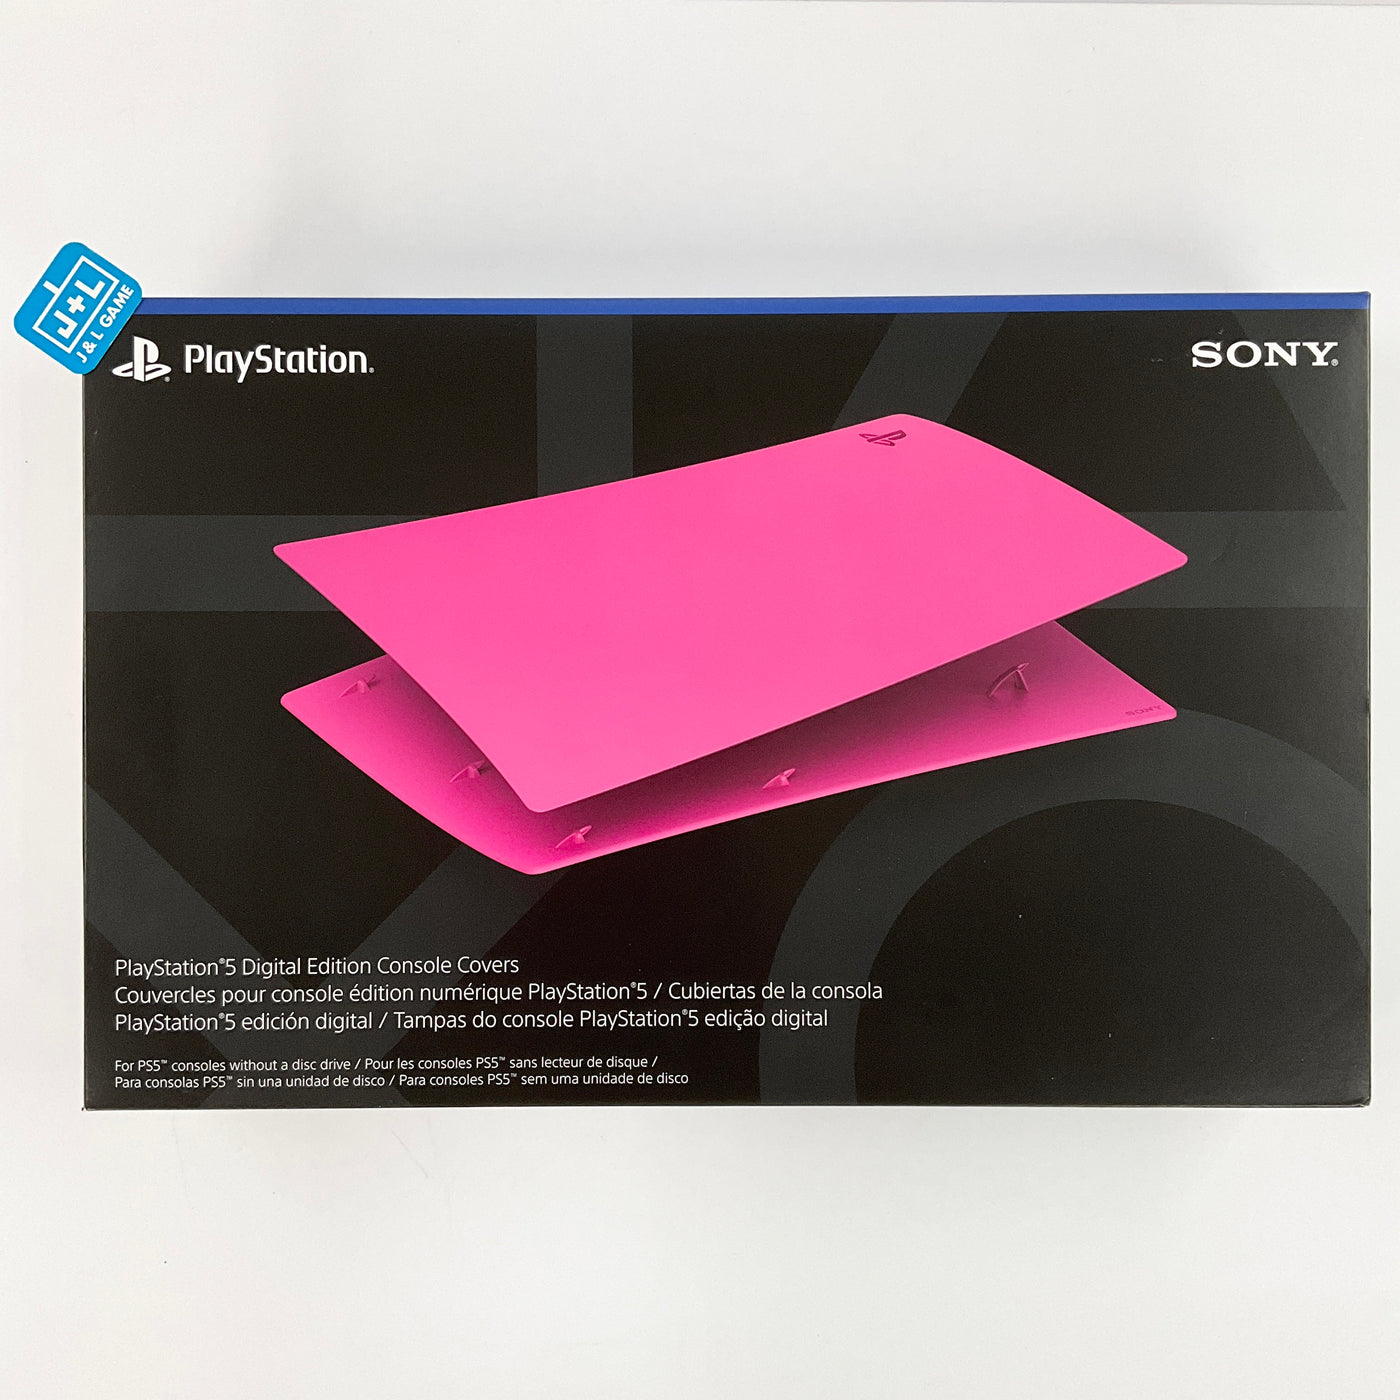 PS5™ Console Covers - Nova Pink